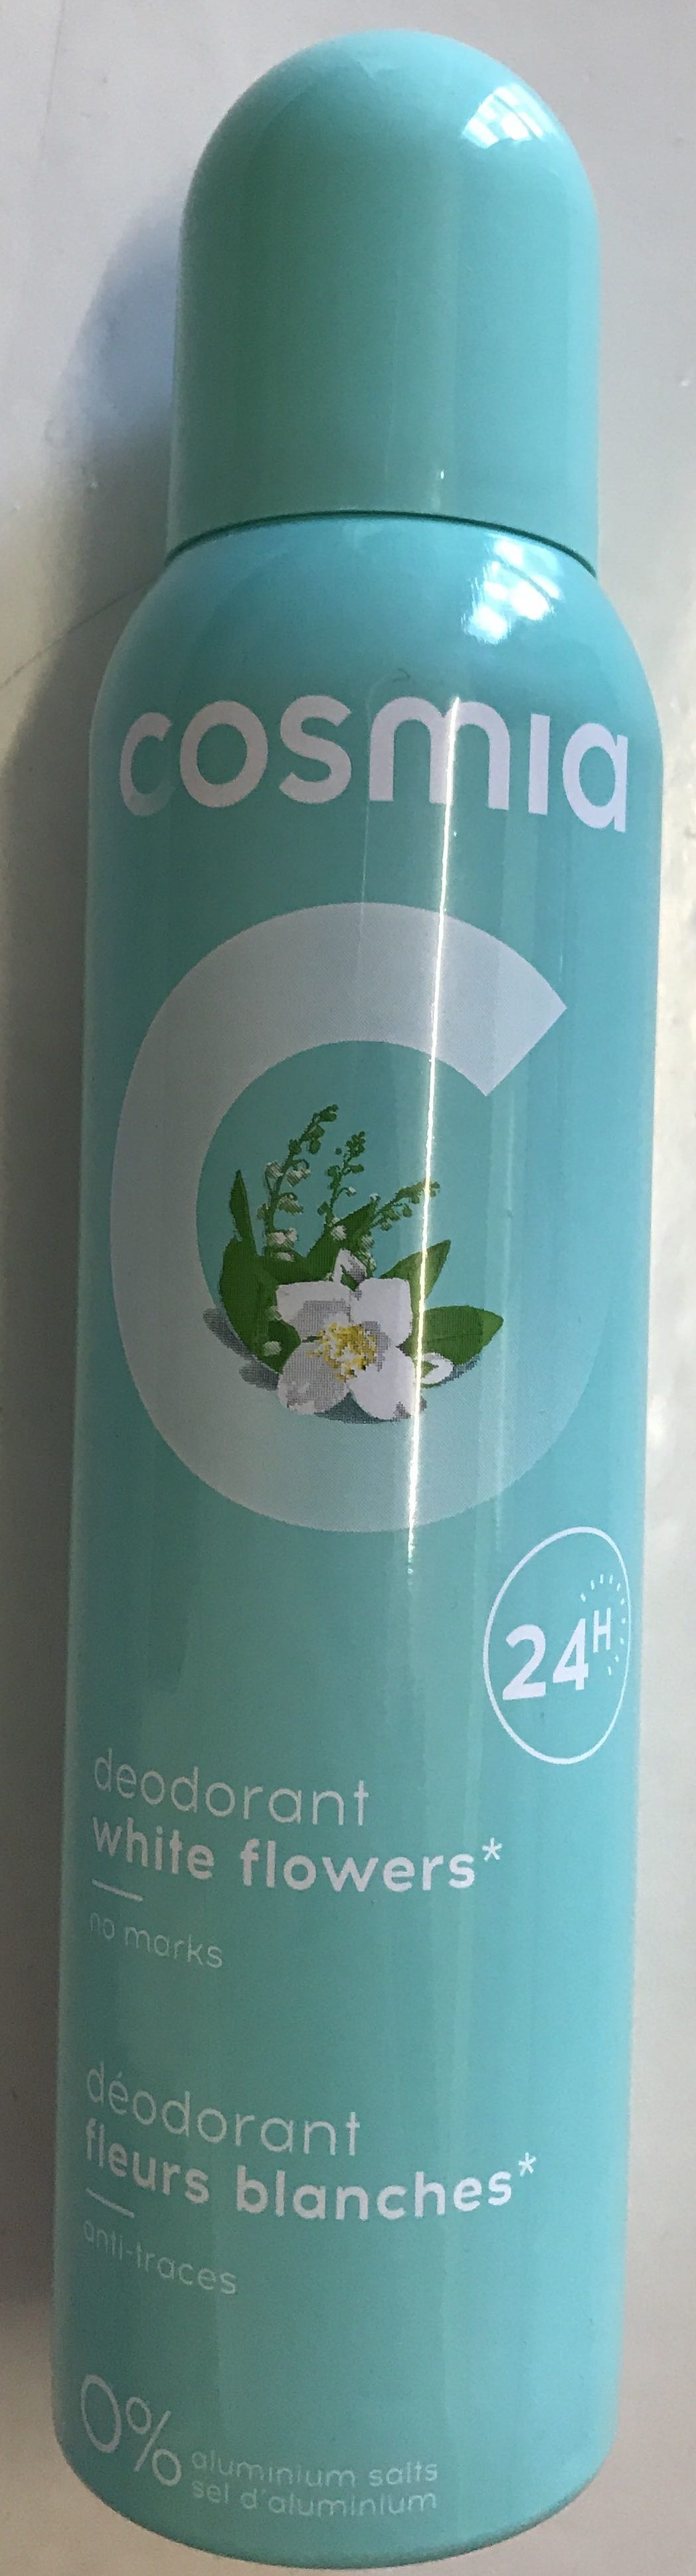 Déodorant fleurs blanches 24H - 製品 - fr